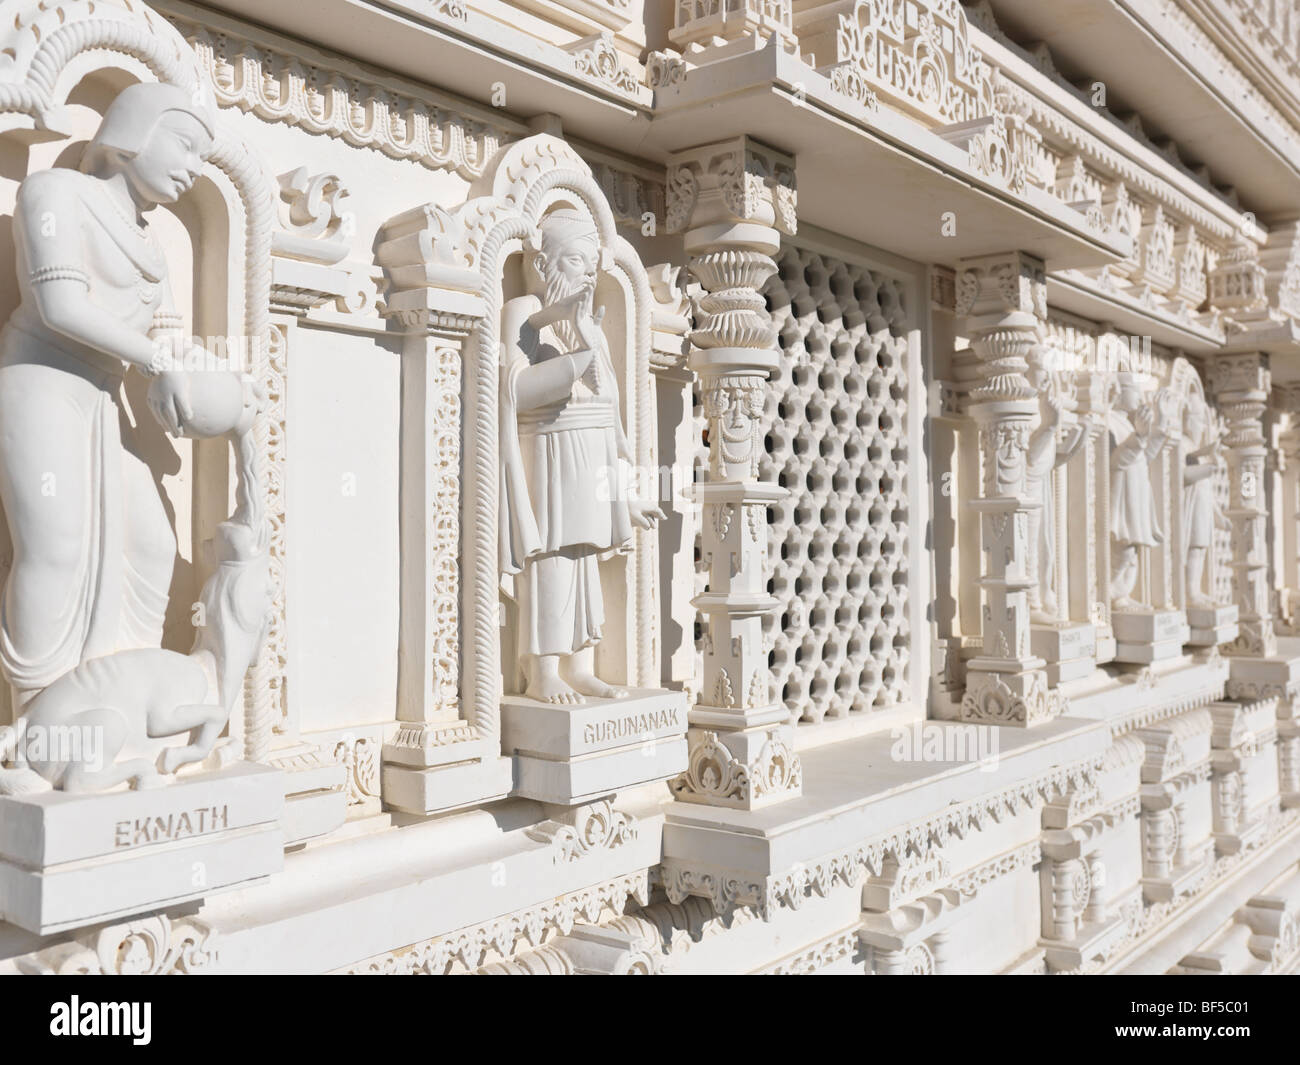 The Swaminarayan Mandir hand-carved white marble Hindu temple. Eknath and Gurunanak carvings. Toronto, Ontario, Canada. Stock Photo